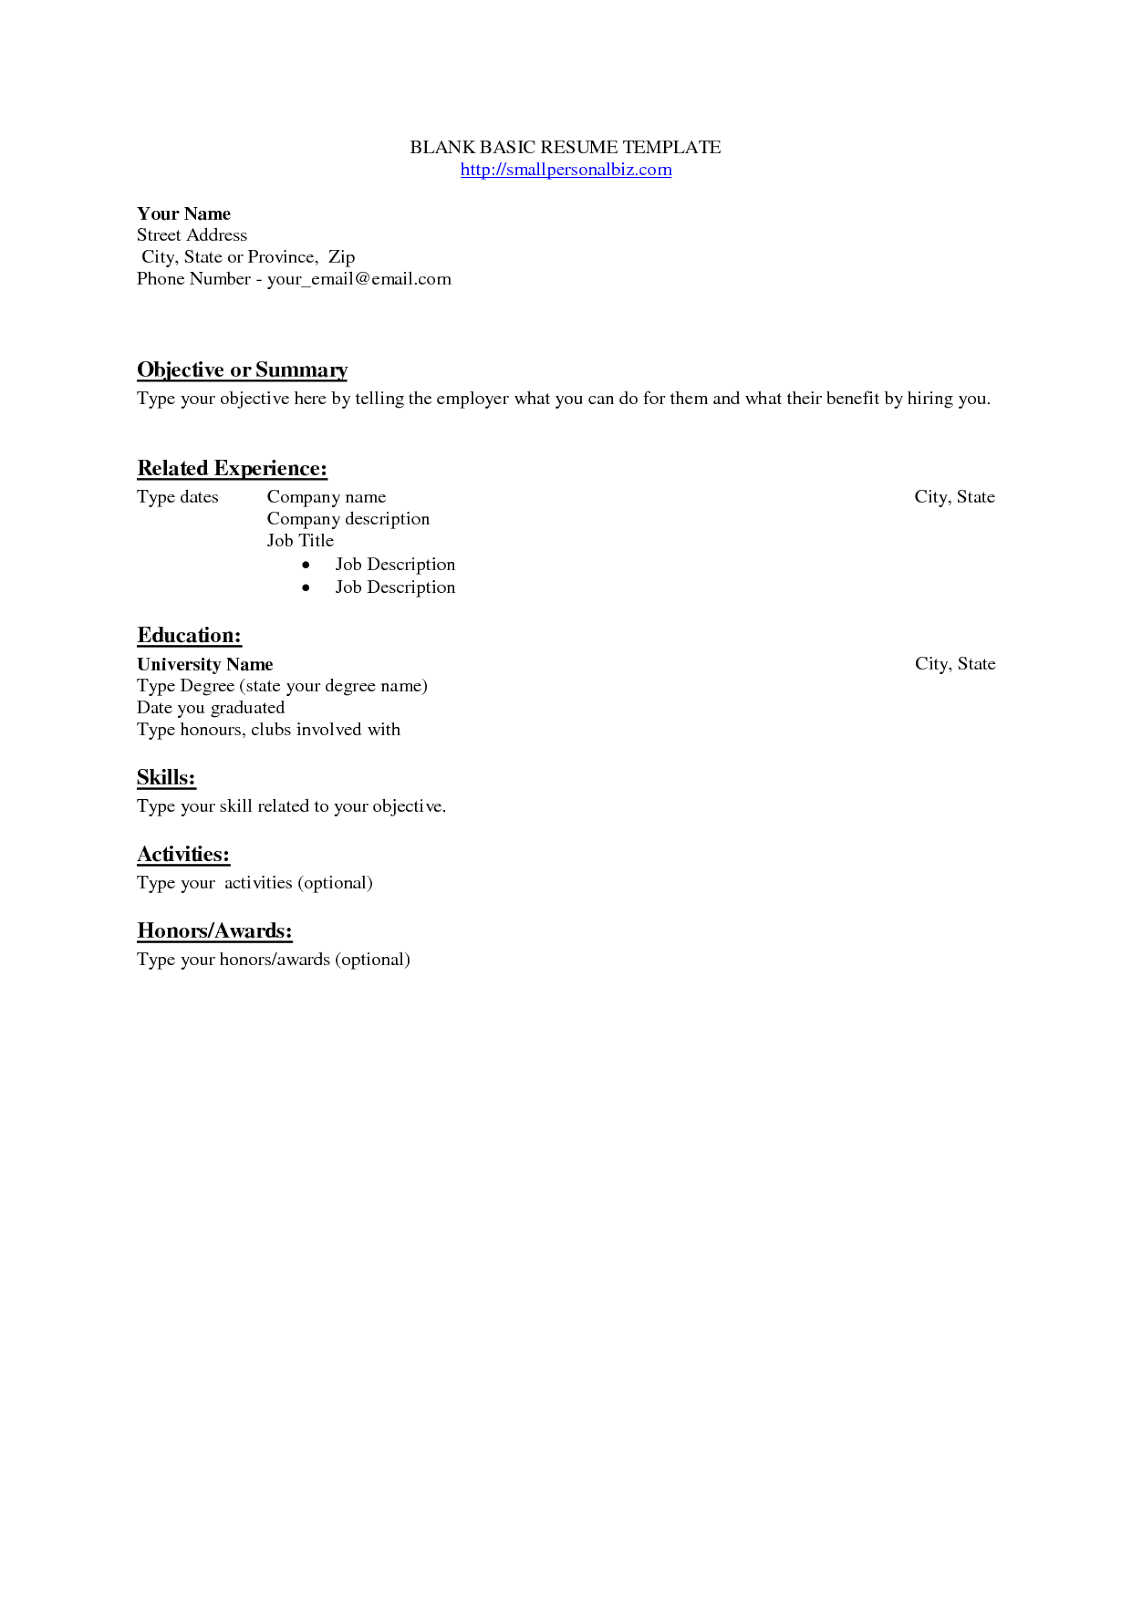 Copy of a blank resume